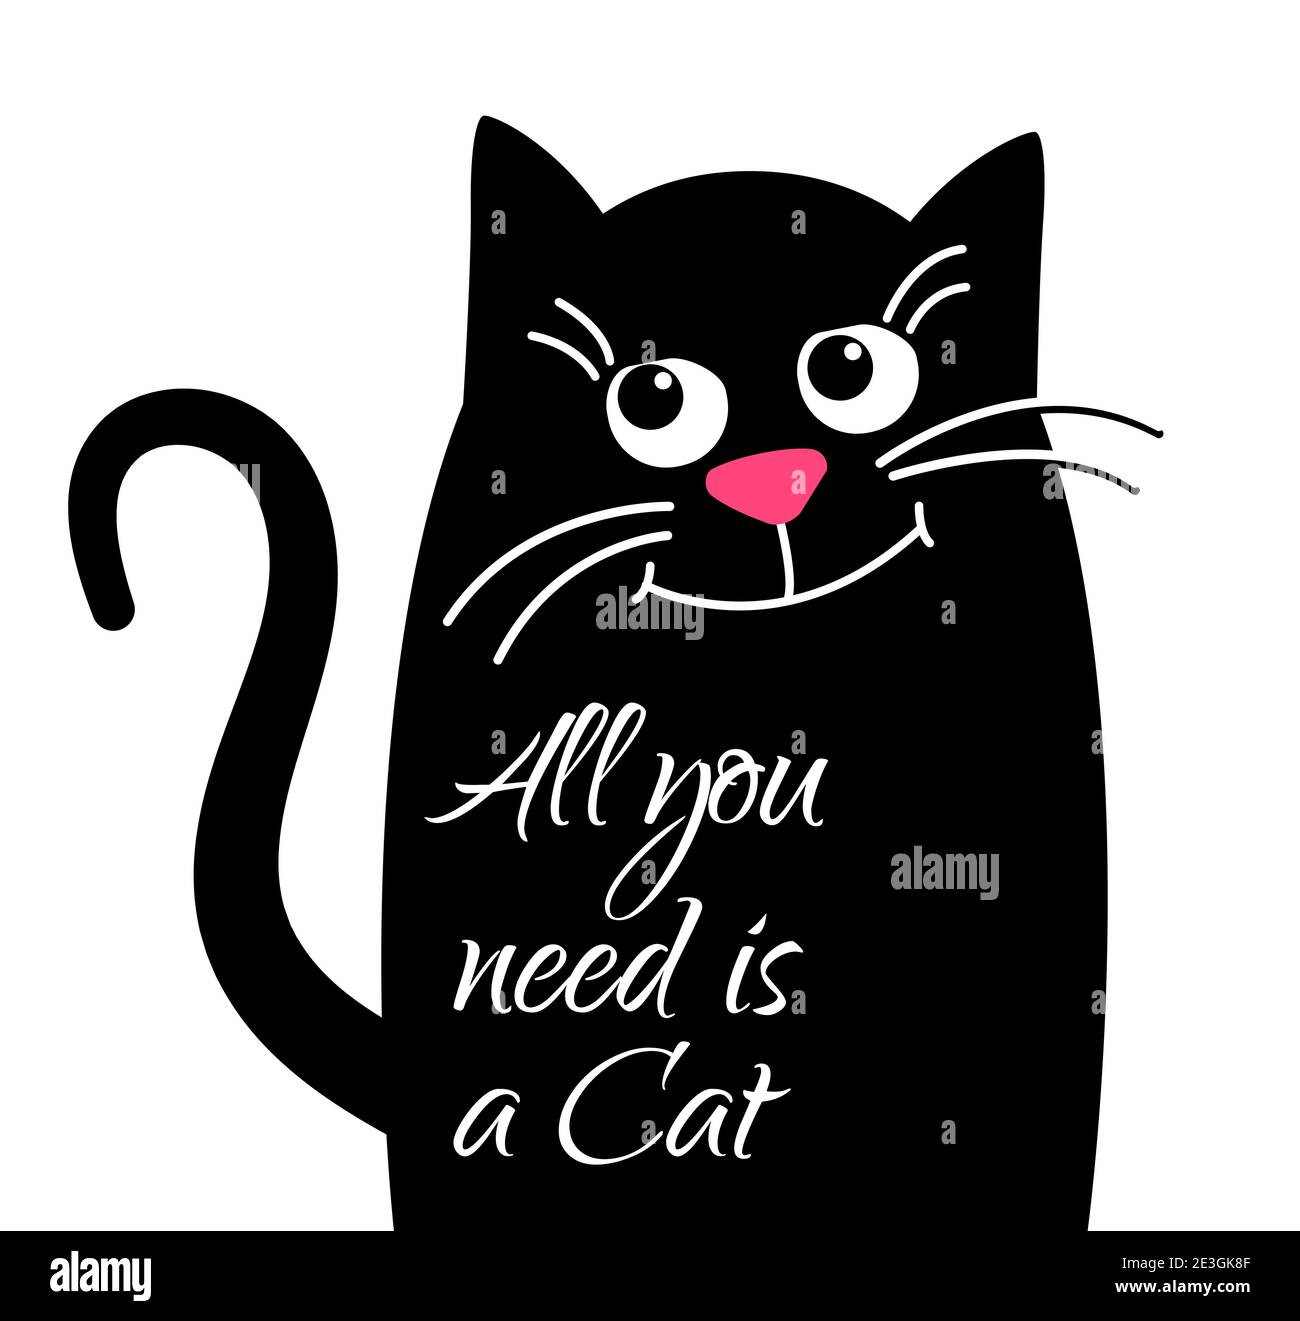 Cute Black Cat Icon. Funny Cartoon Character. Kawaii Animal. Tail